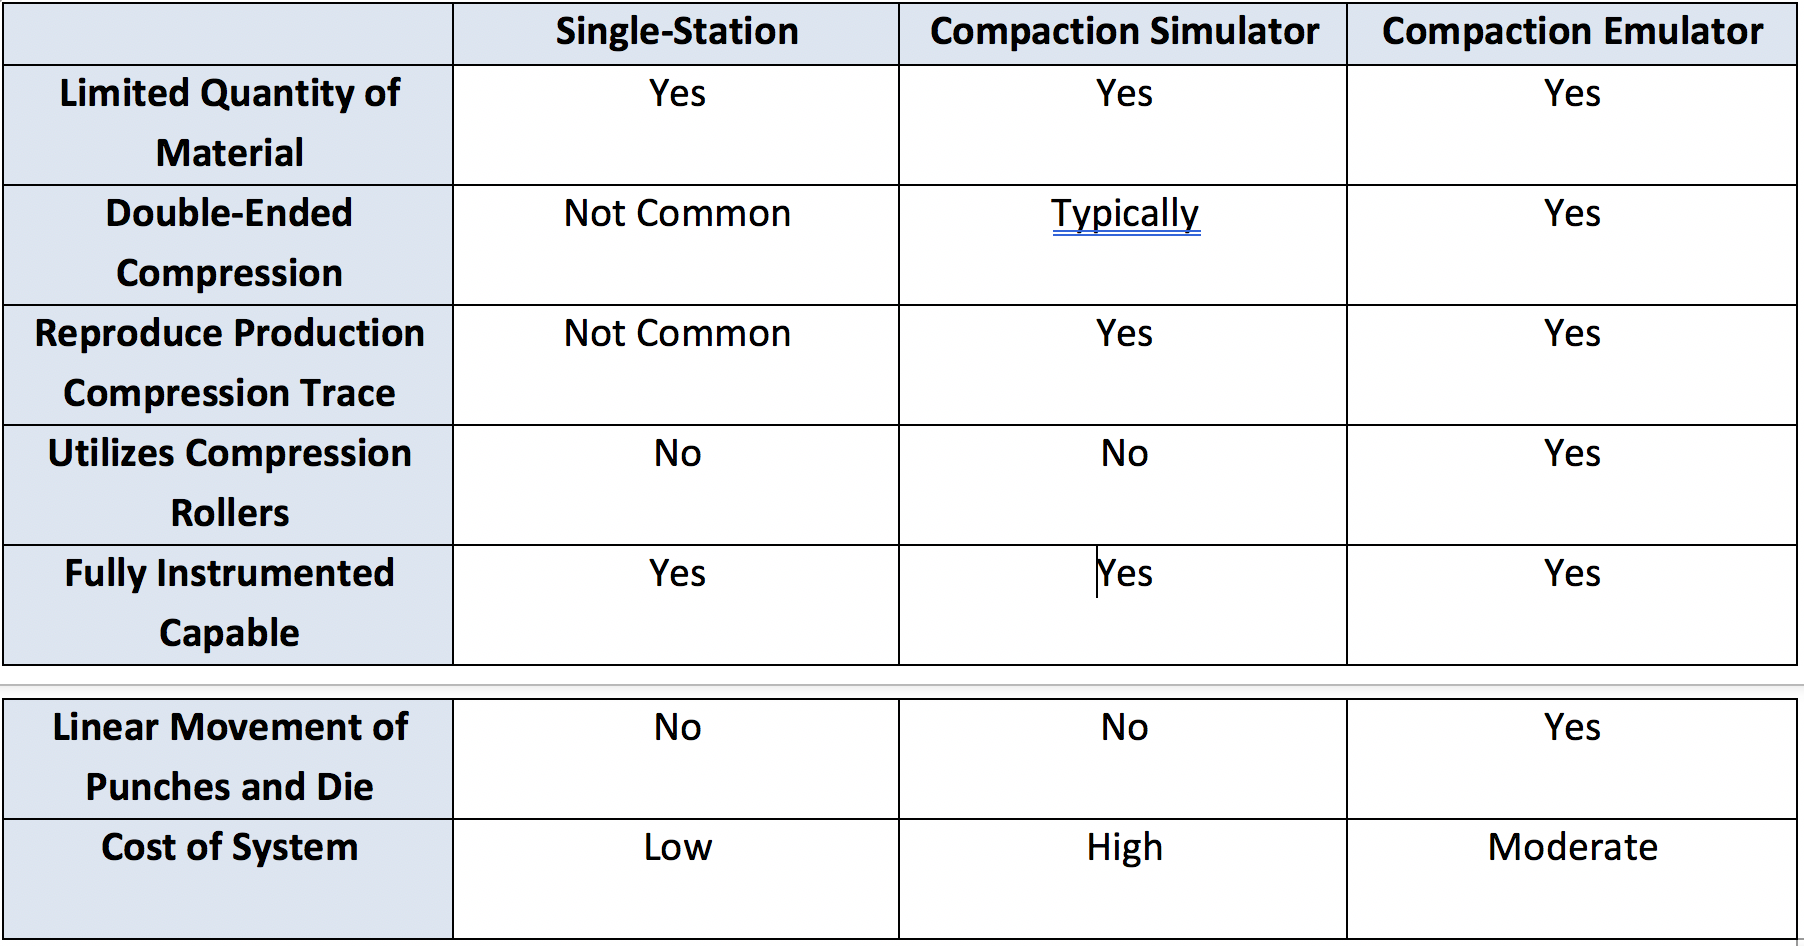 Table 1. Single-Station Press Comparison